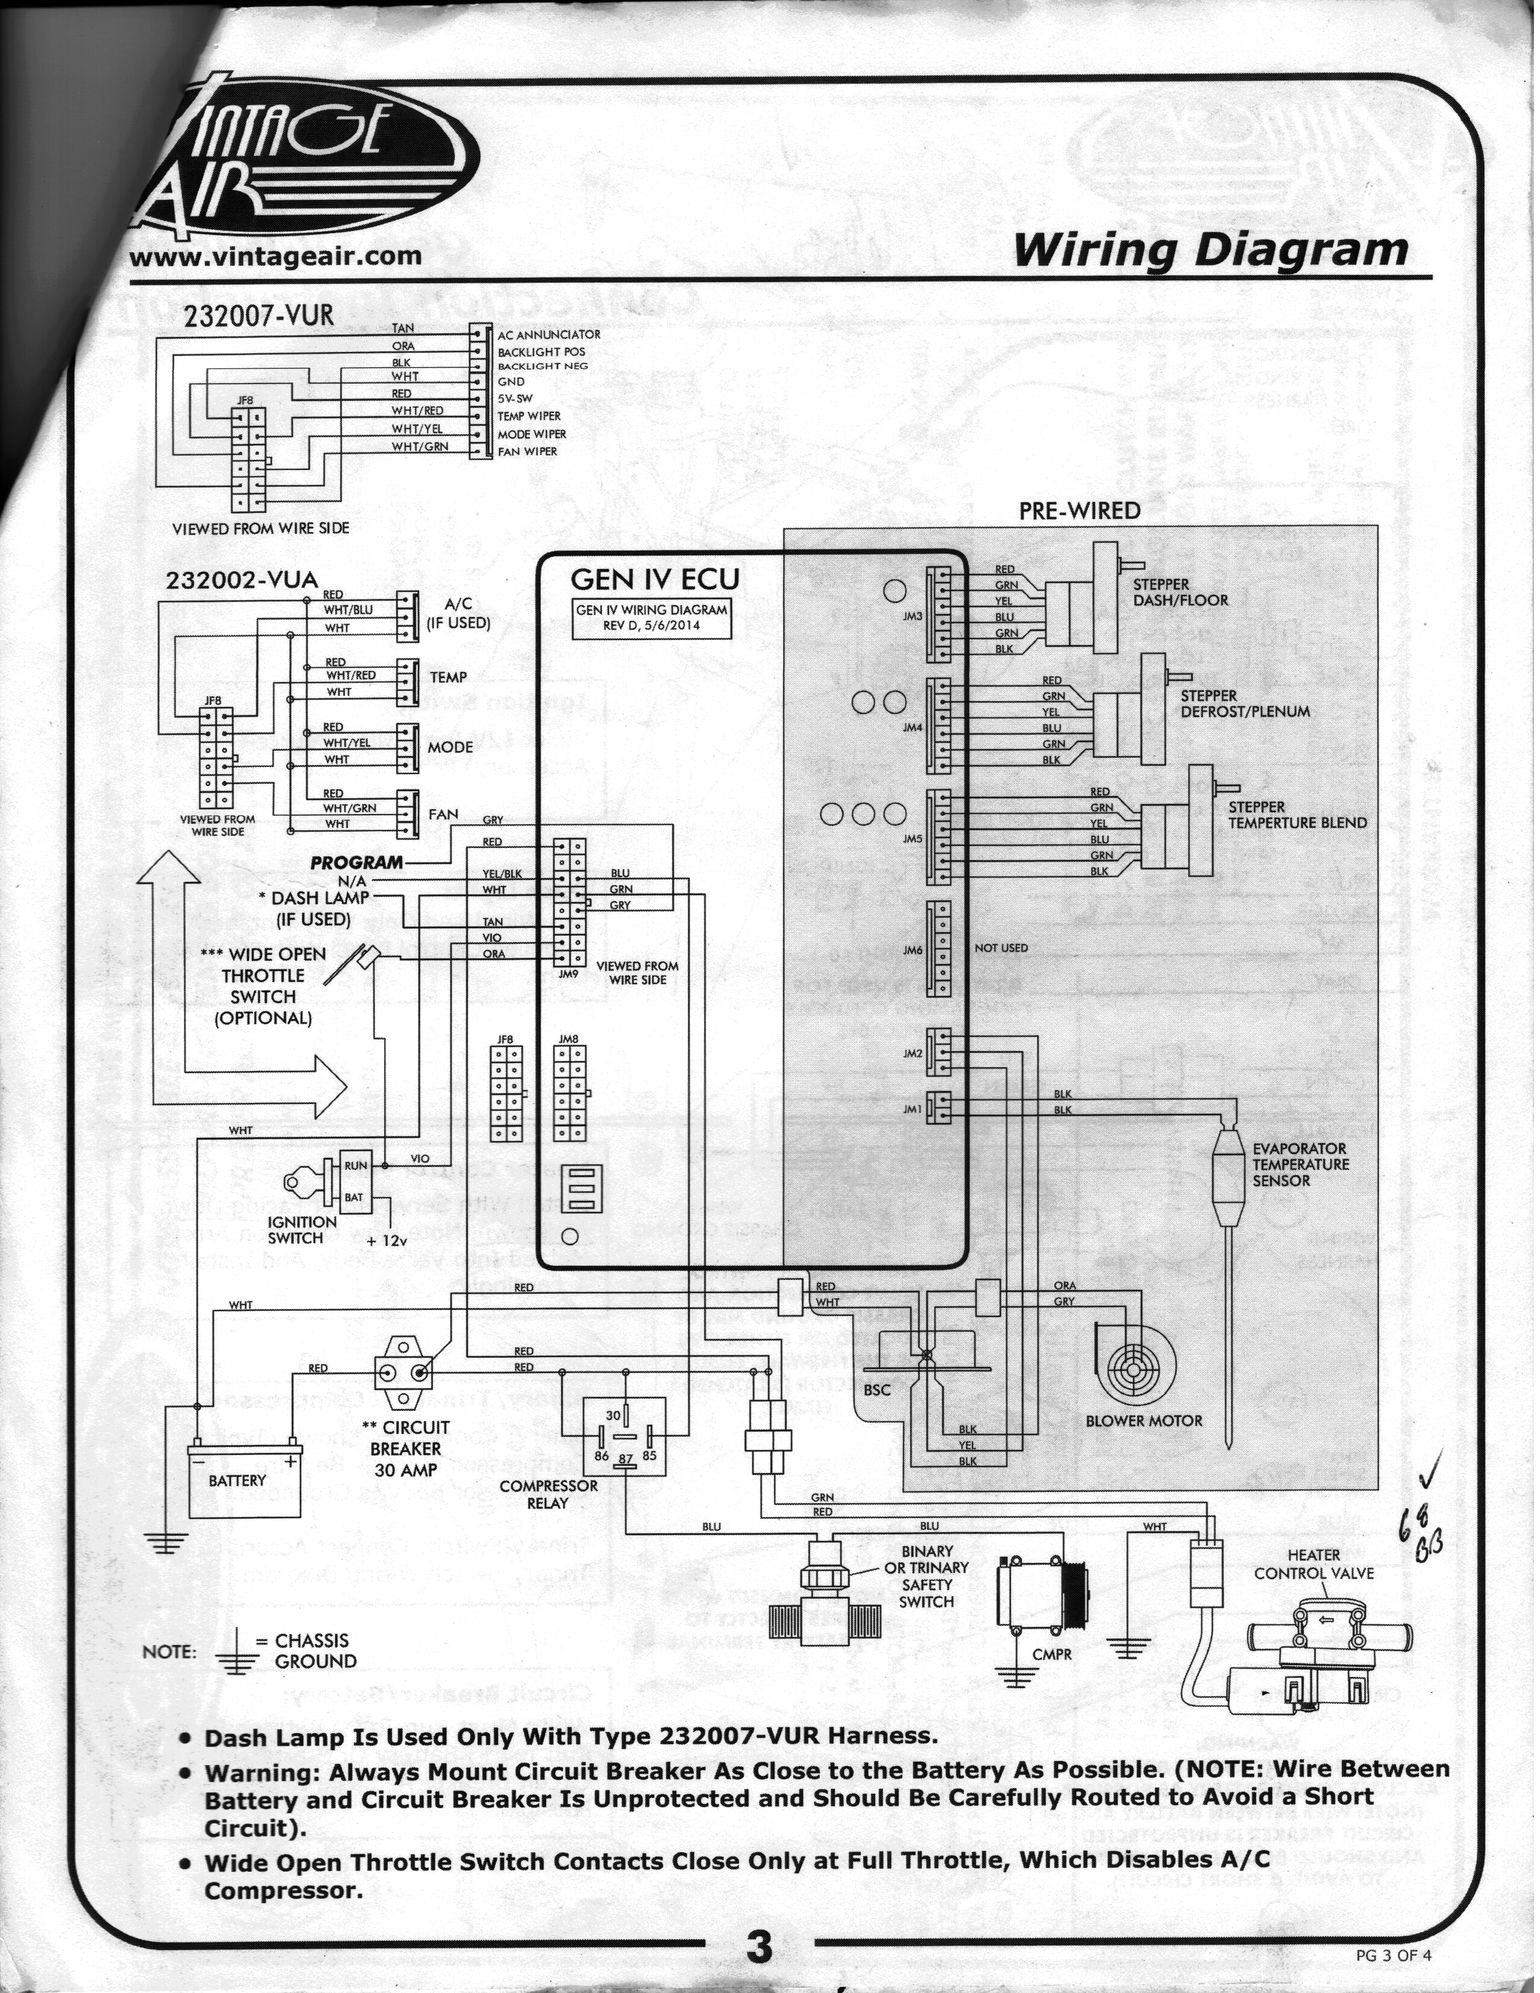 Vintage Air Wiring Diagram - efcaviation.com